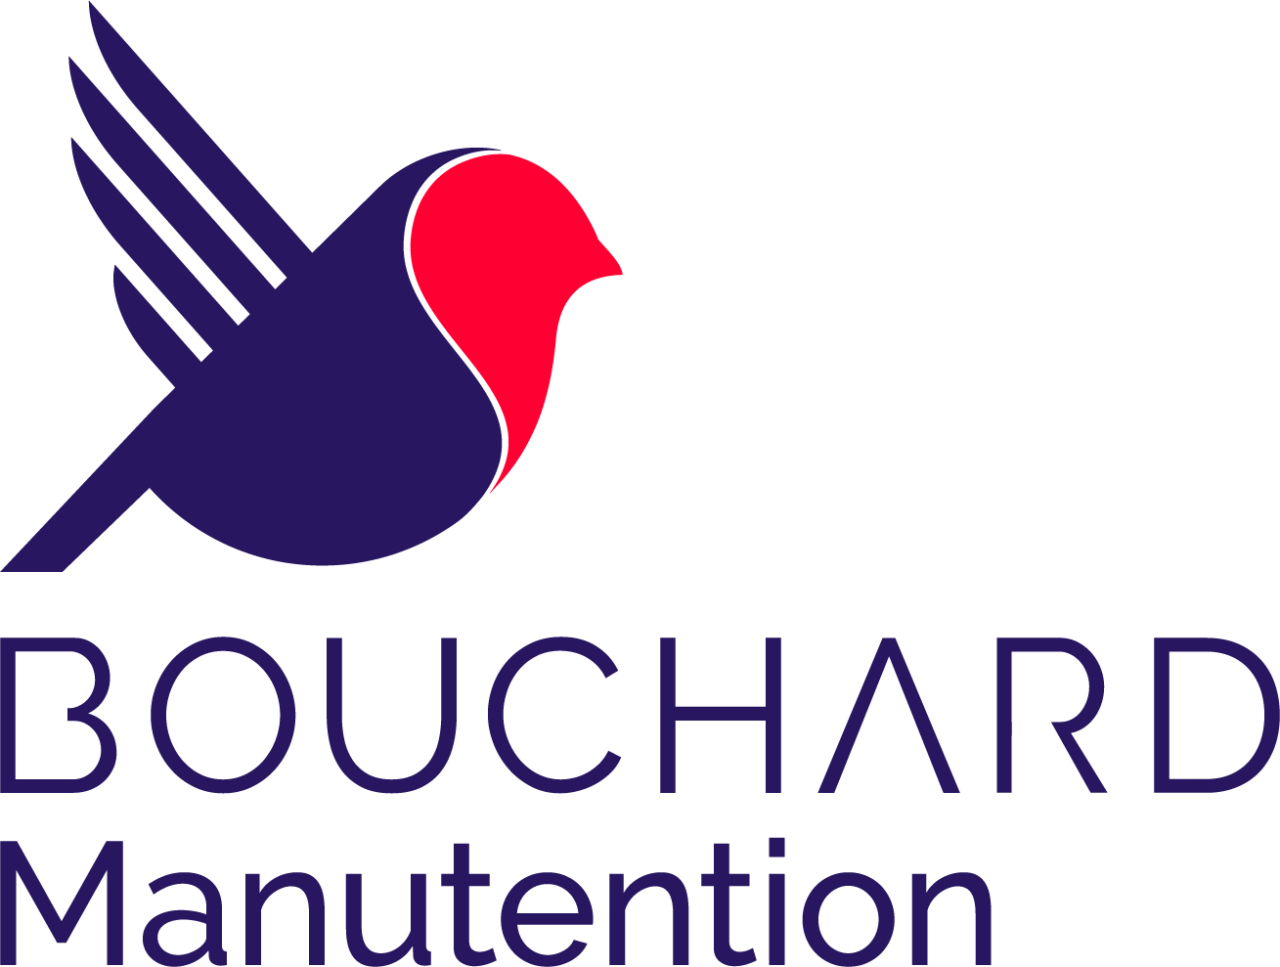 logo bouchard manutention